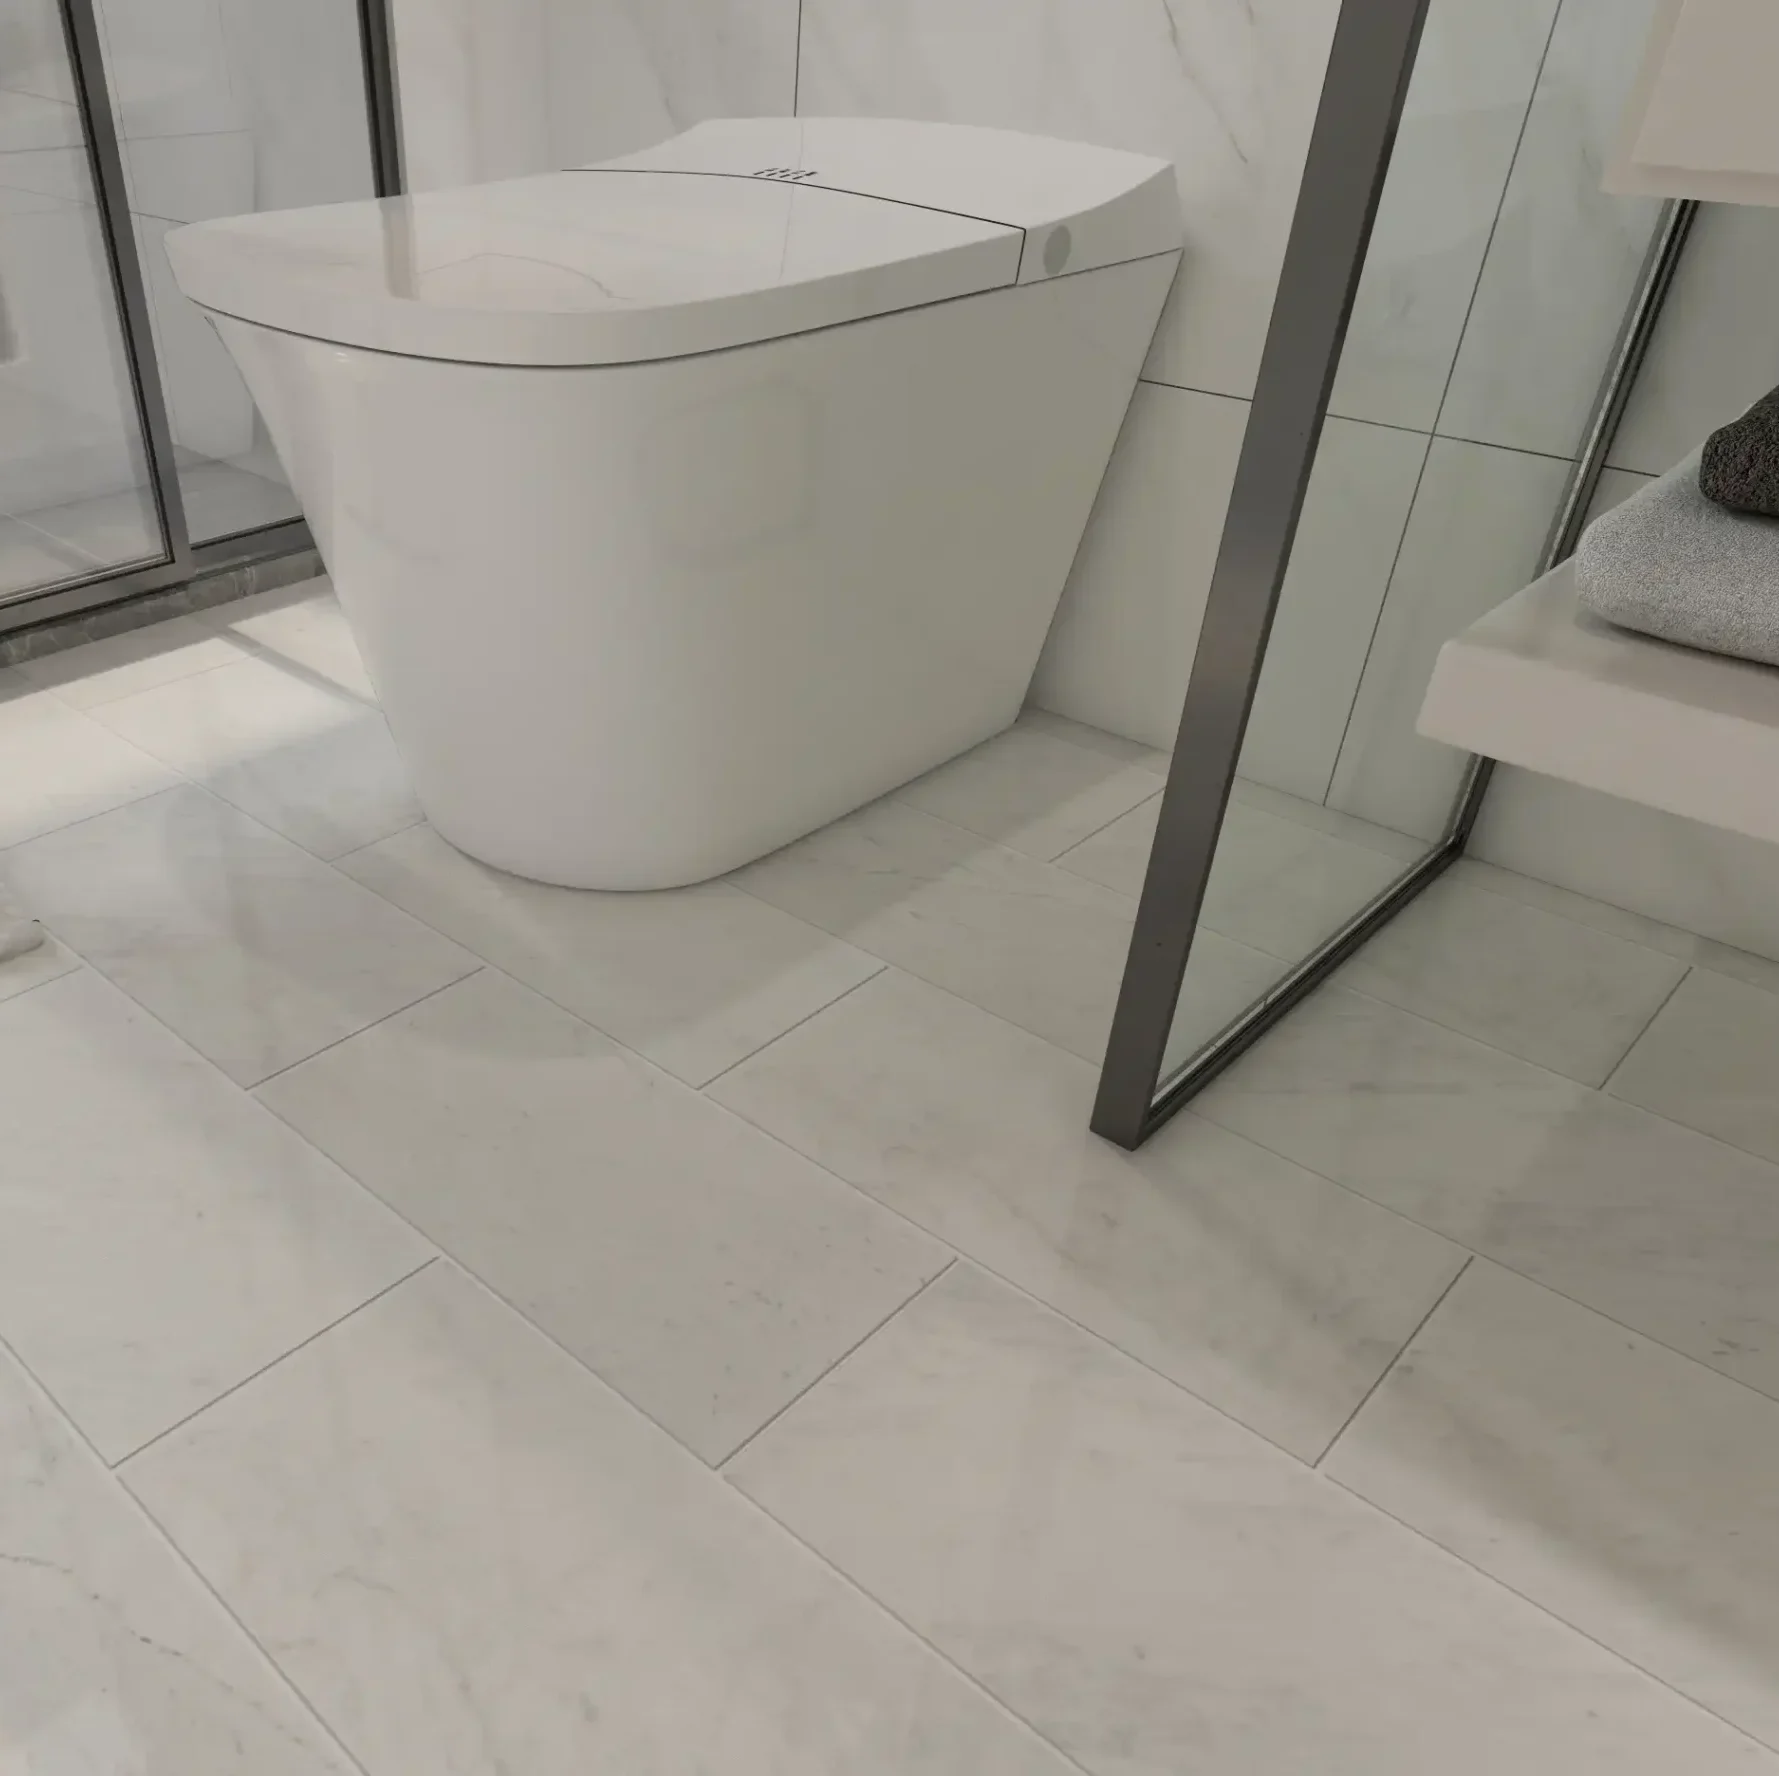 Image of bathroom floor featuring 12x24 Carrara Marble Tiles